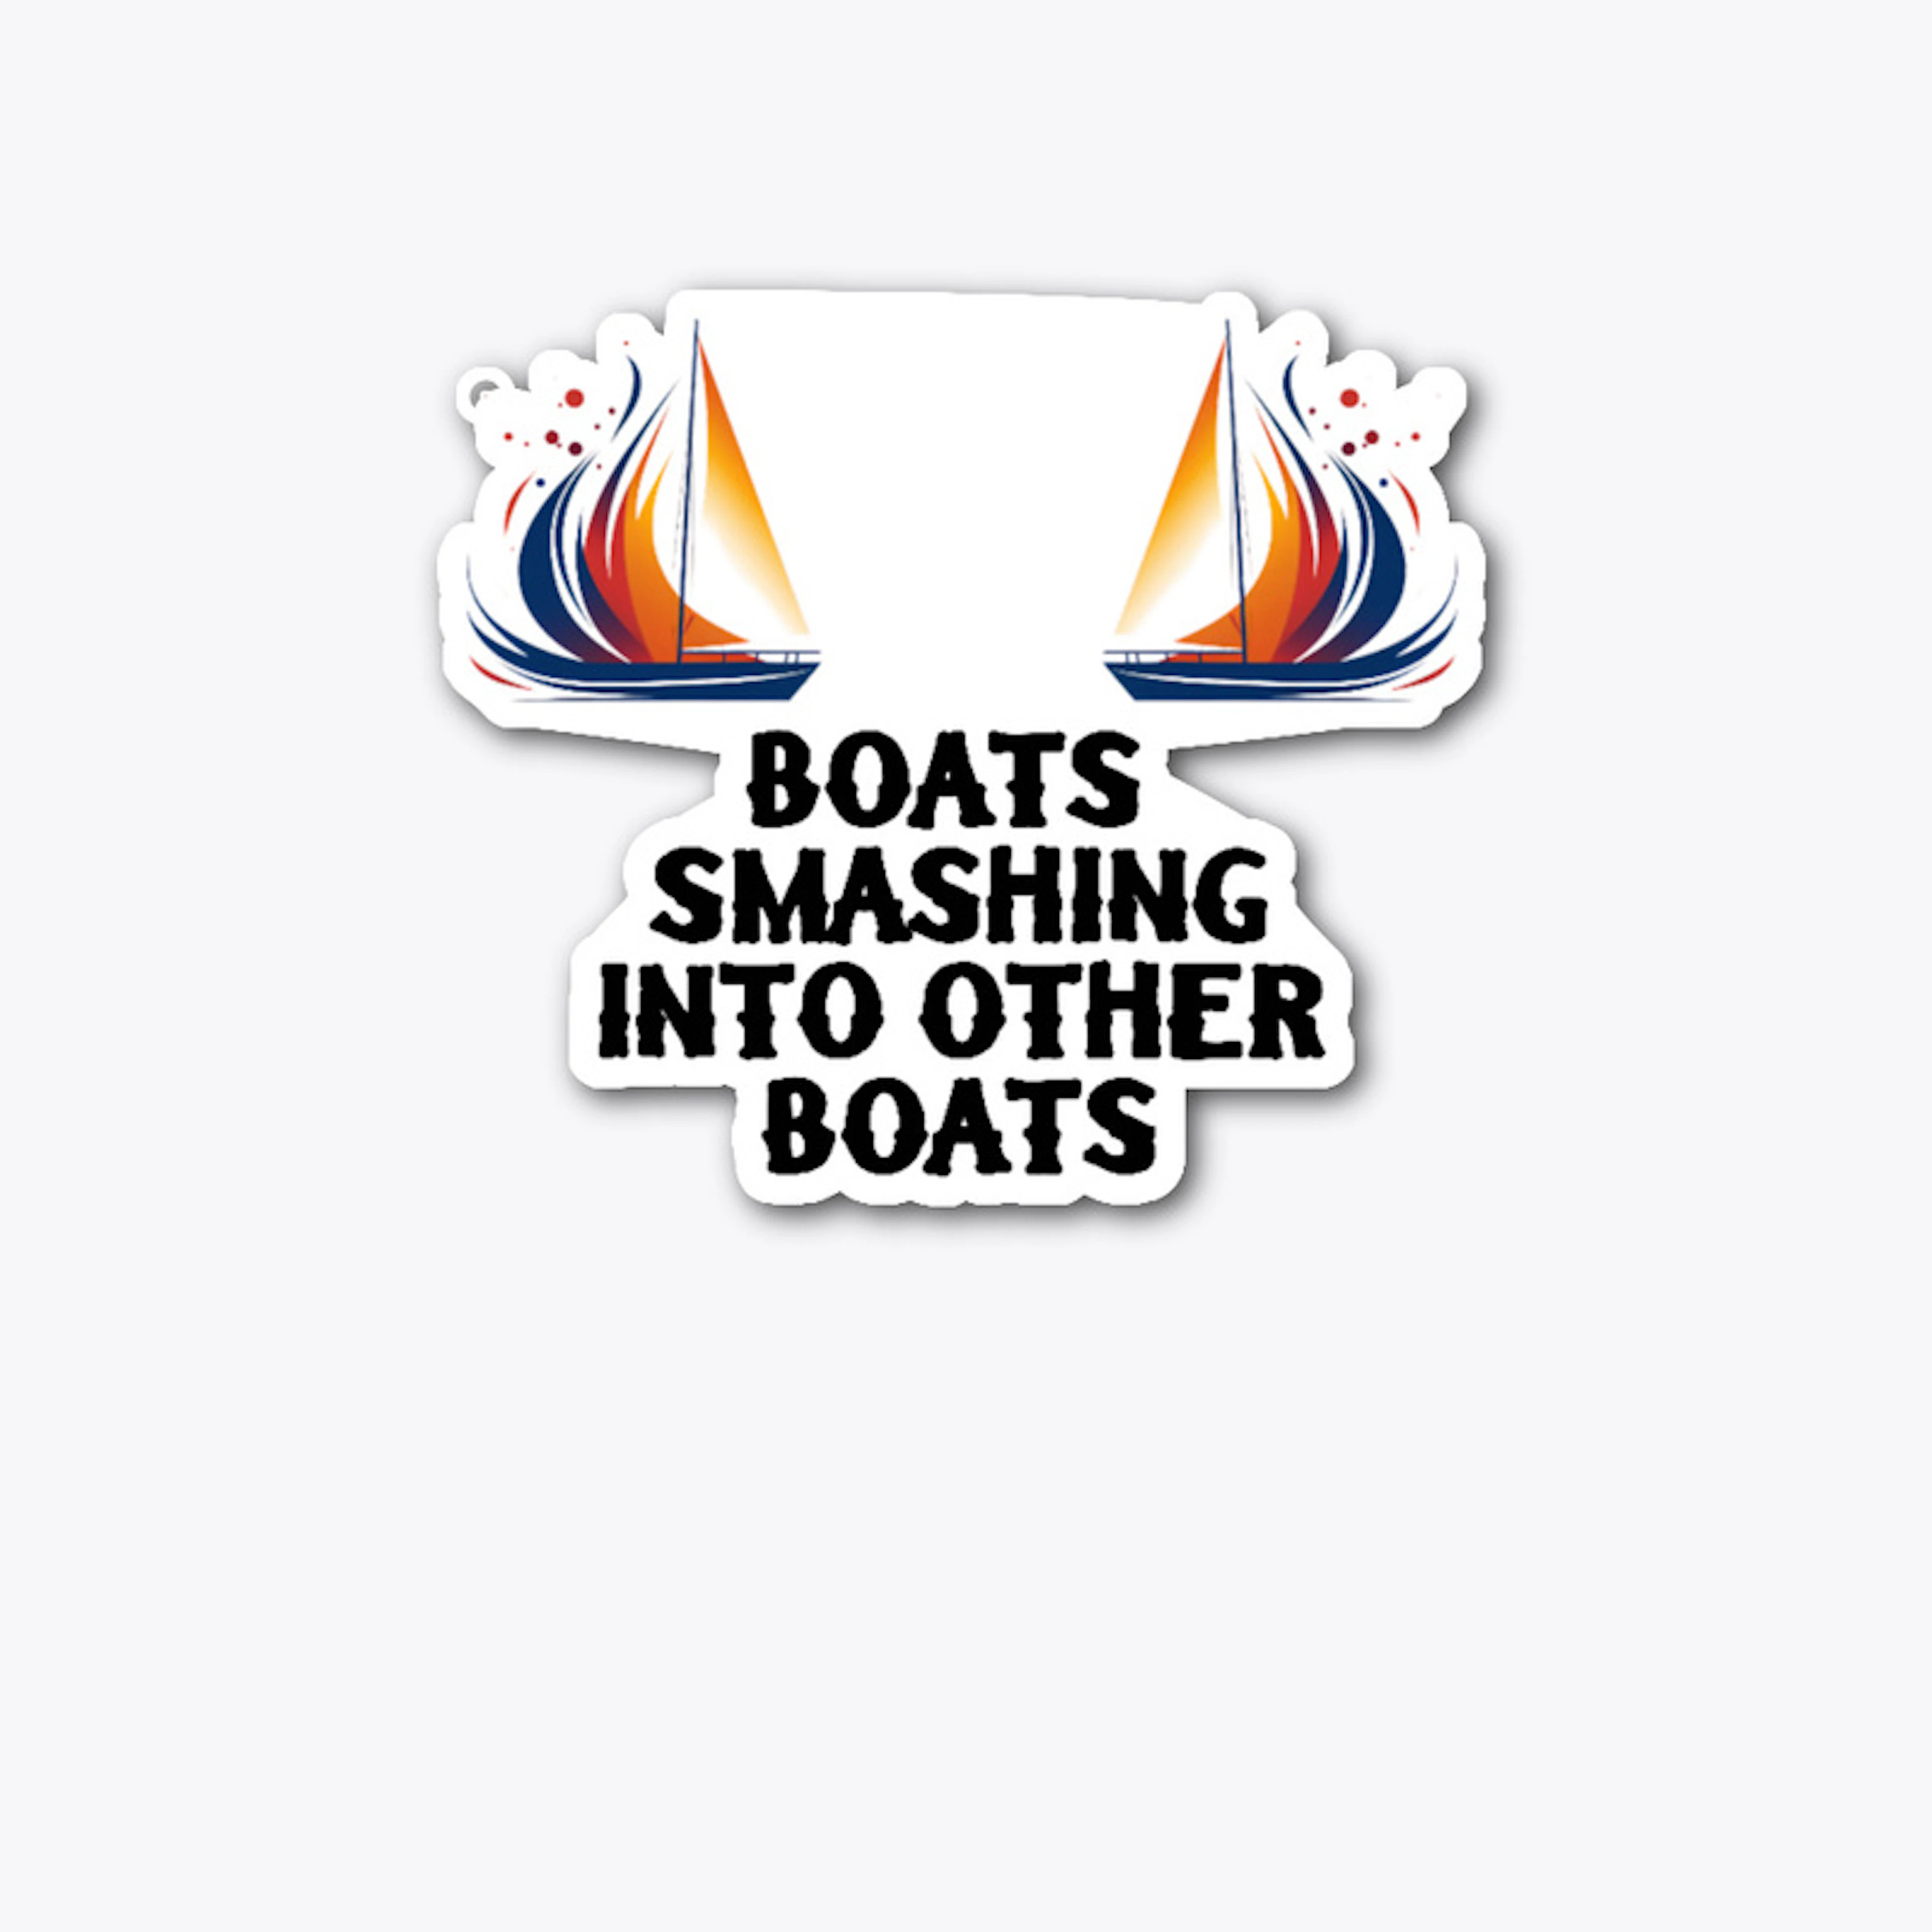 Boats Smashing Into Other Boats logo